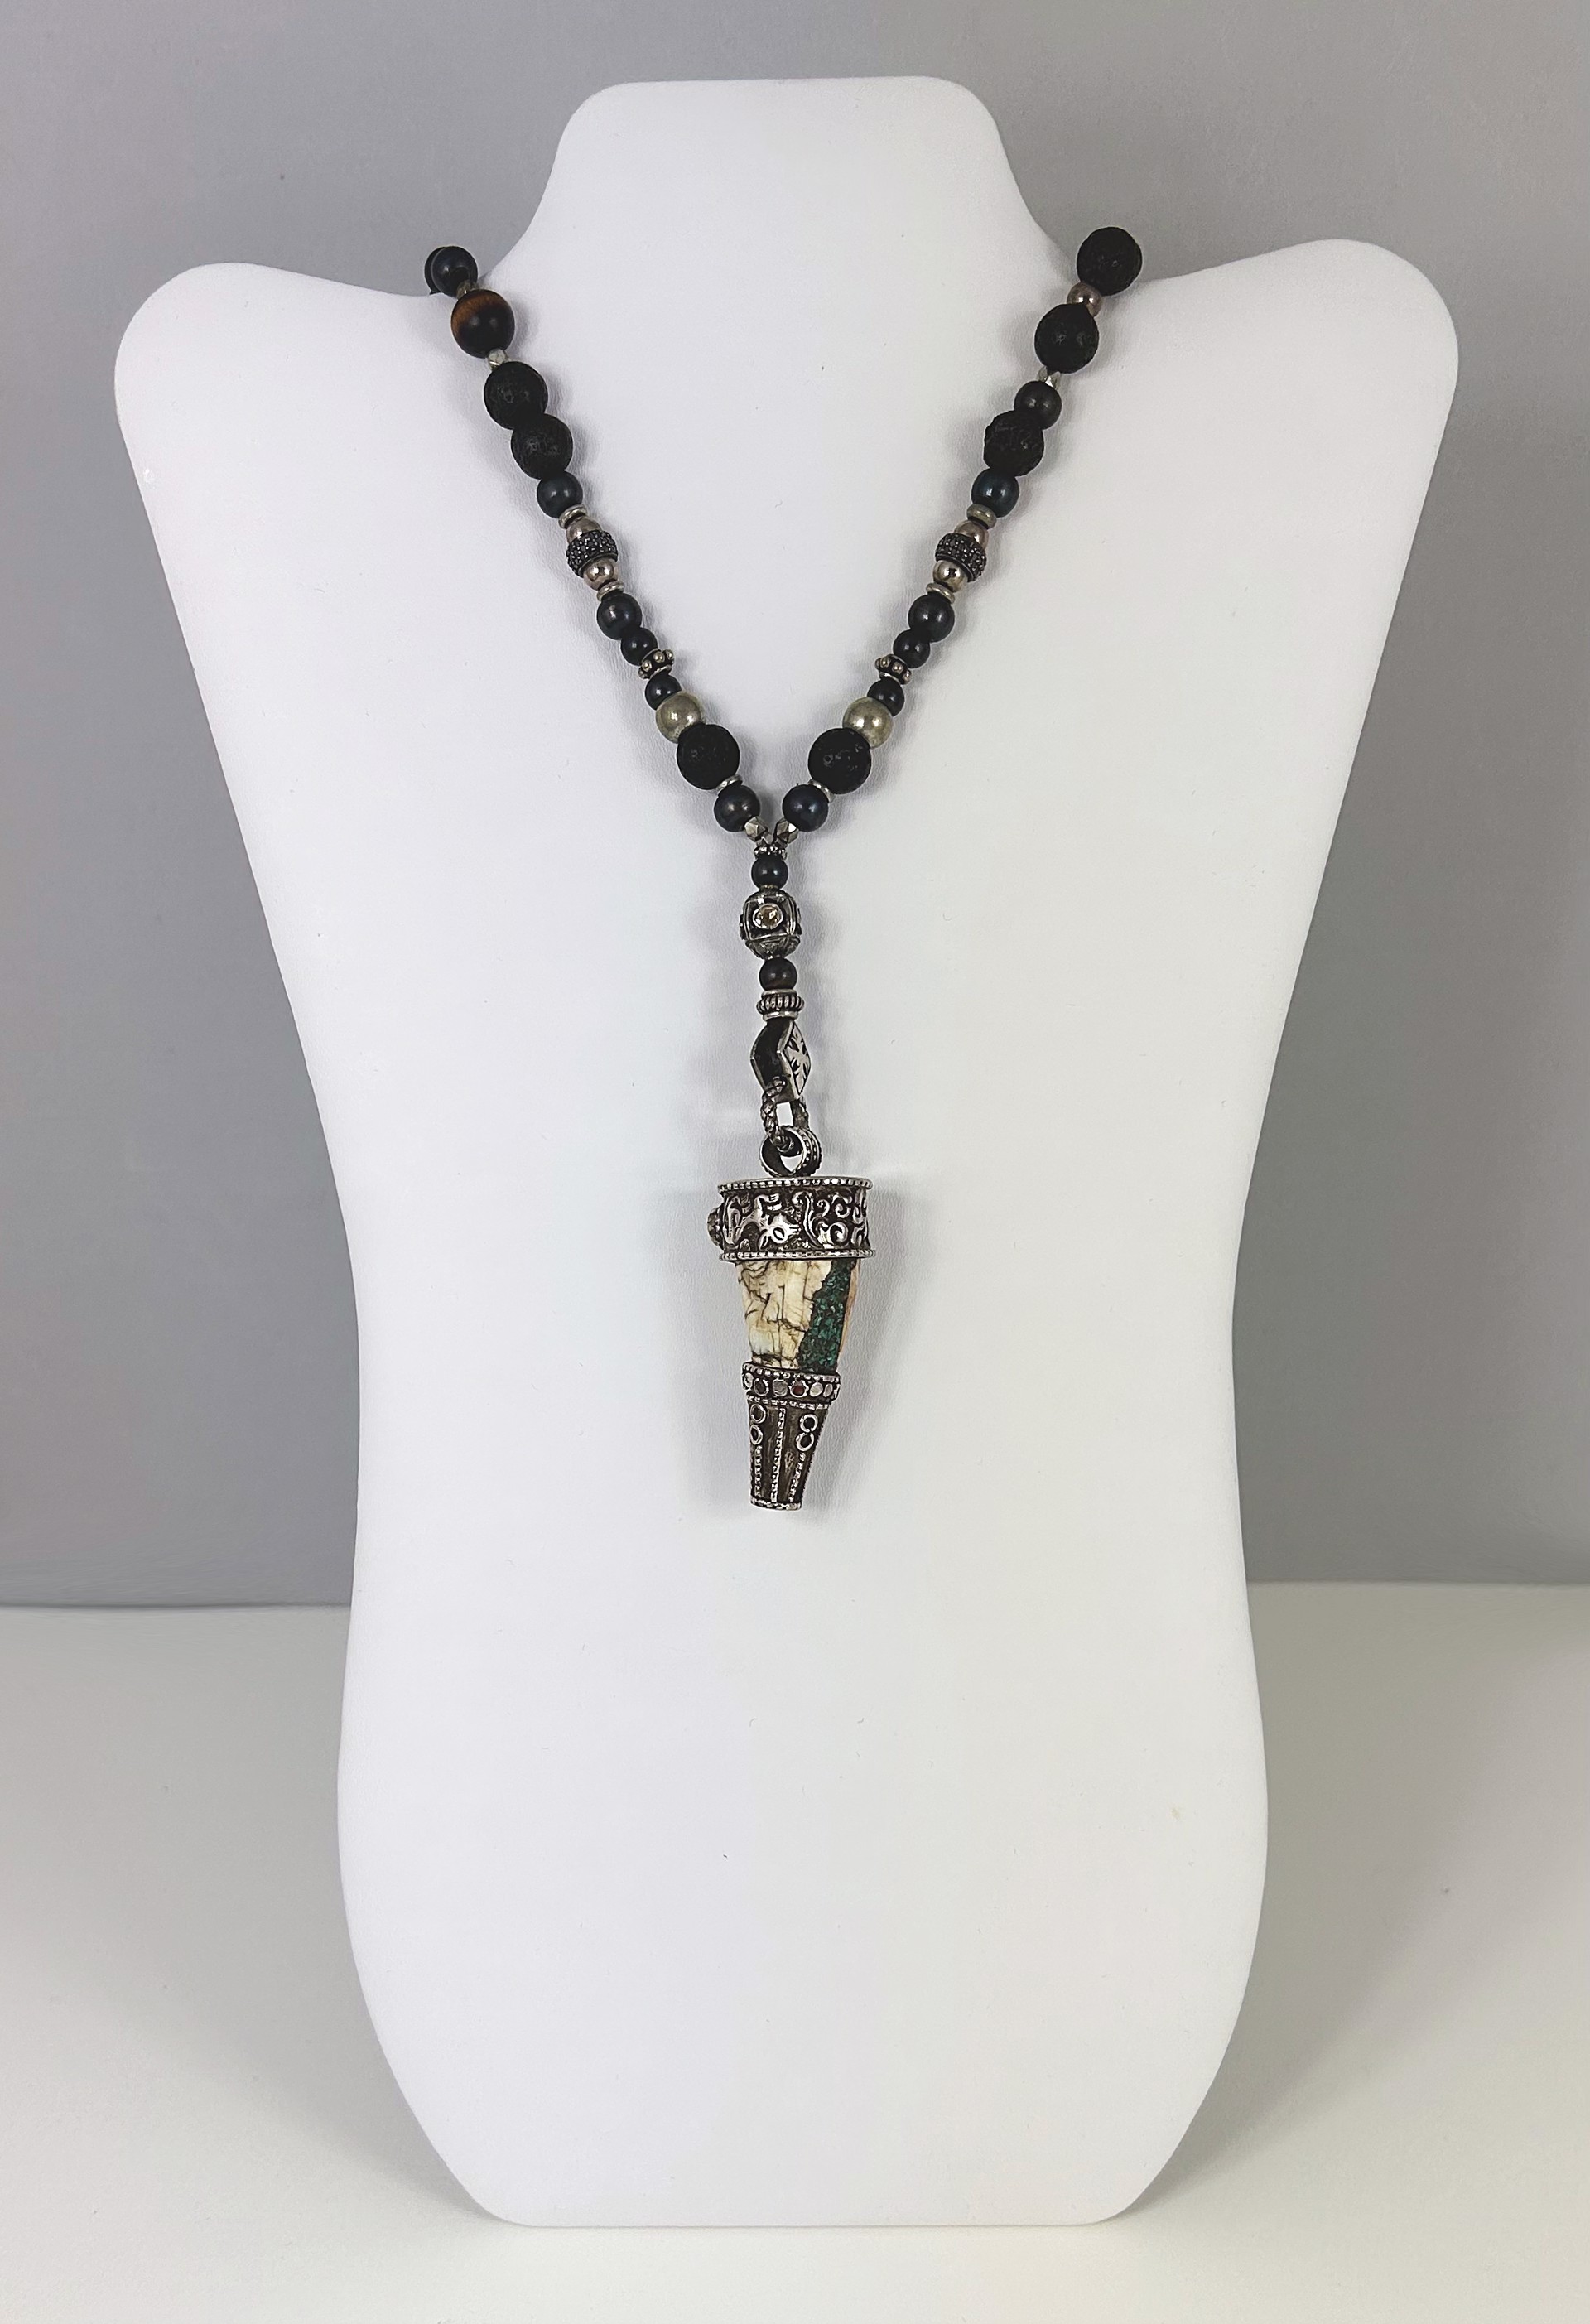 Yak horn necklace with turquoise, diamonds, black pavé spinel beads, lava rock, onyx, wood by Jeri Mitrani